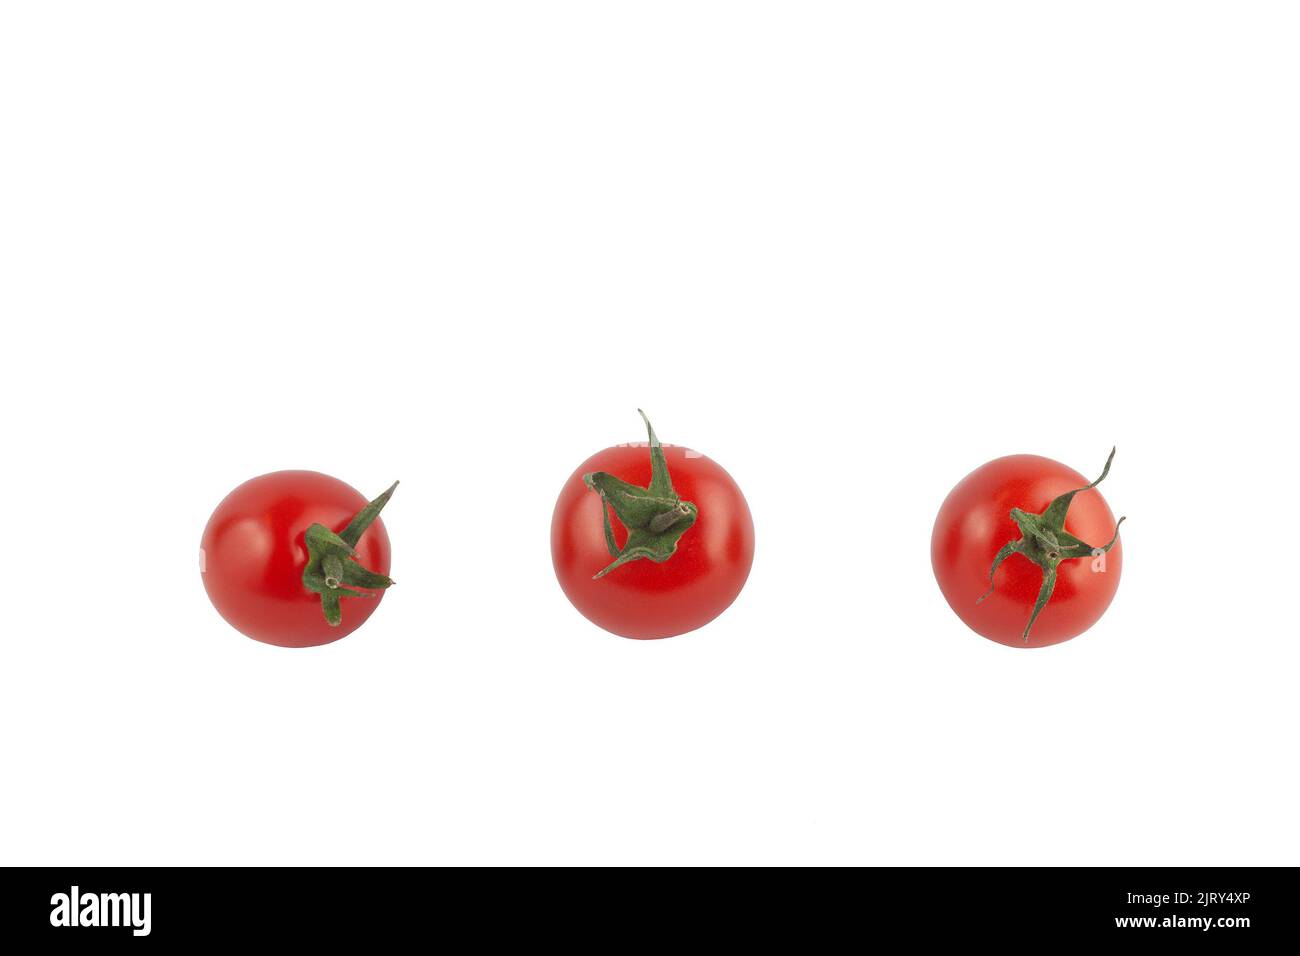 Tres tomates cherry rojos orgánicos frescos alineados sobre un fondo blanco. Recorte. Foto de stock